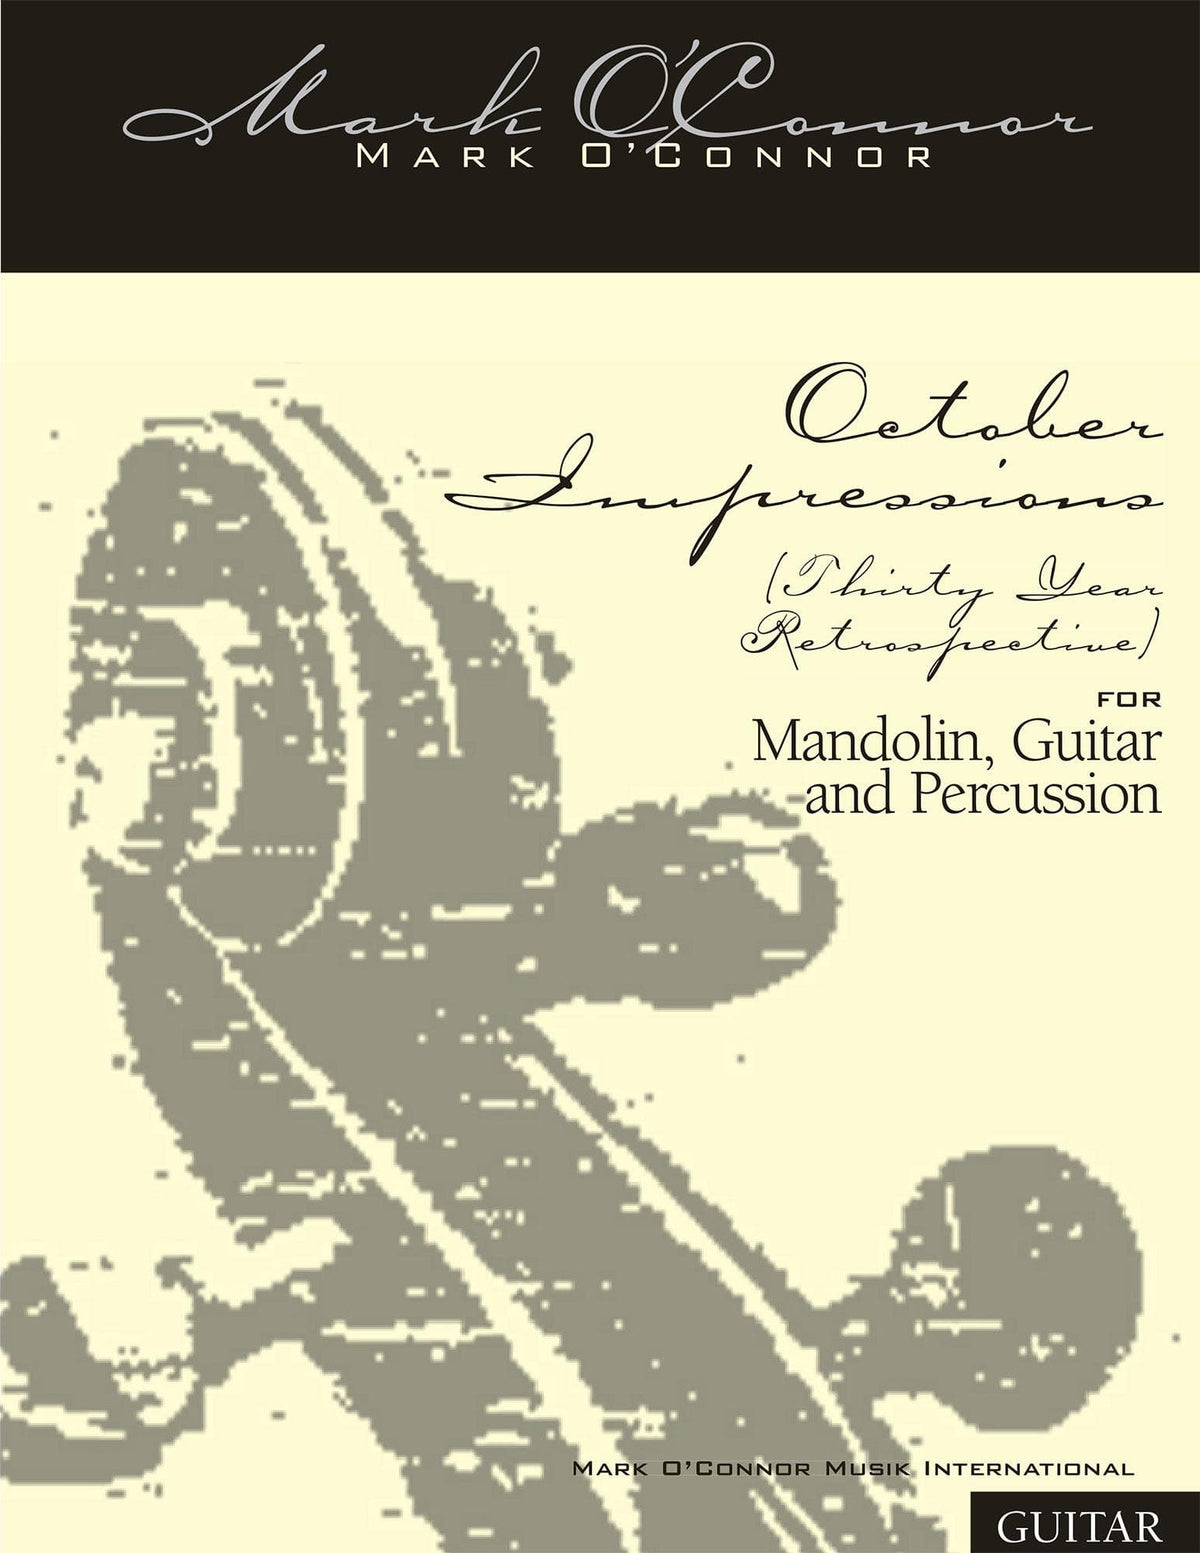 O'Connor, Mark - October Impressions for Mandolin, Guitar, and Percussion - Guitar - Digital Download